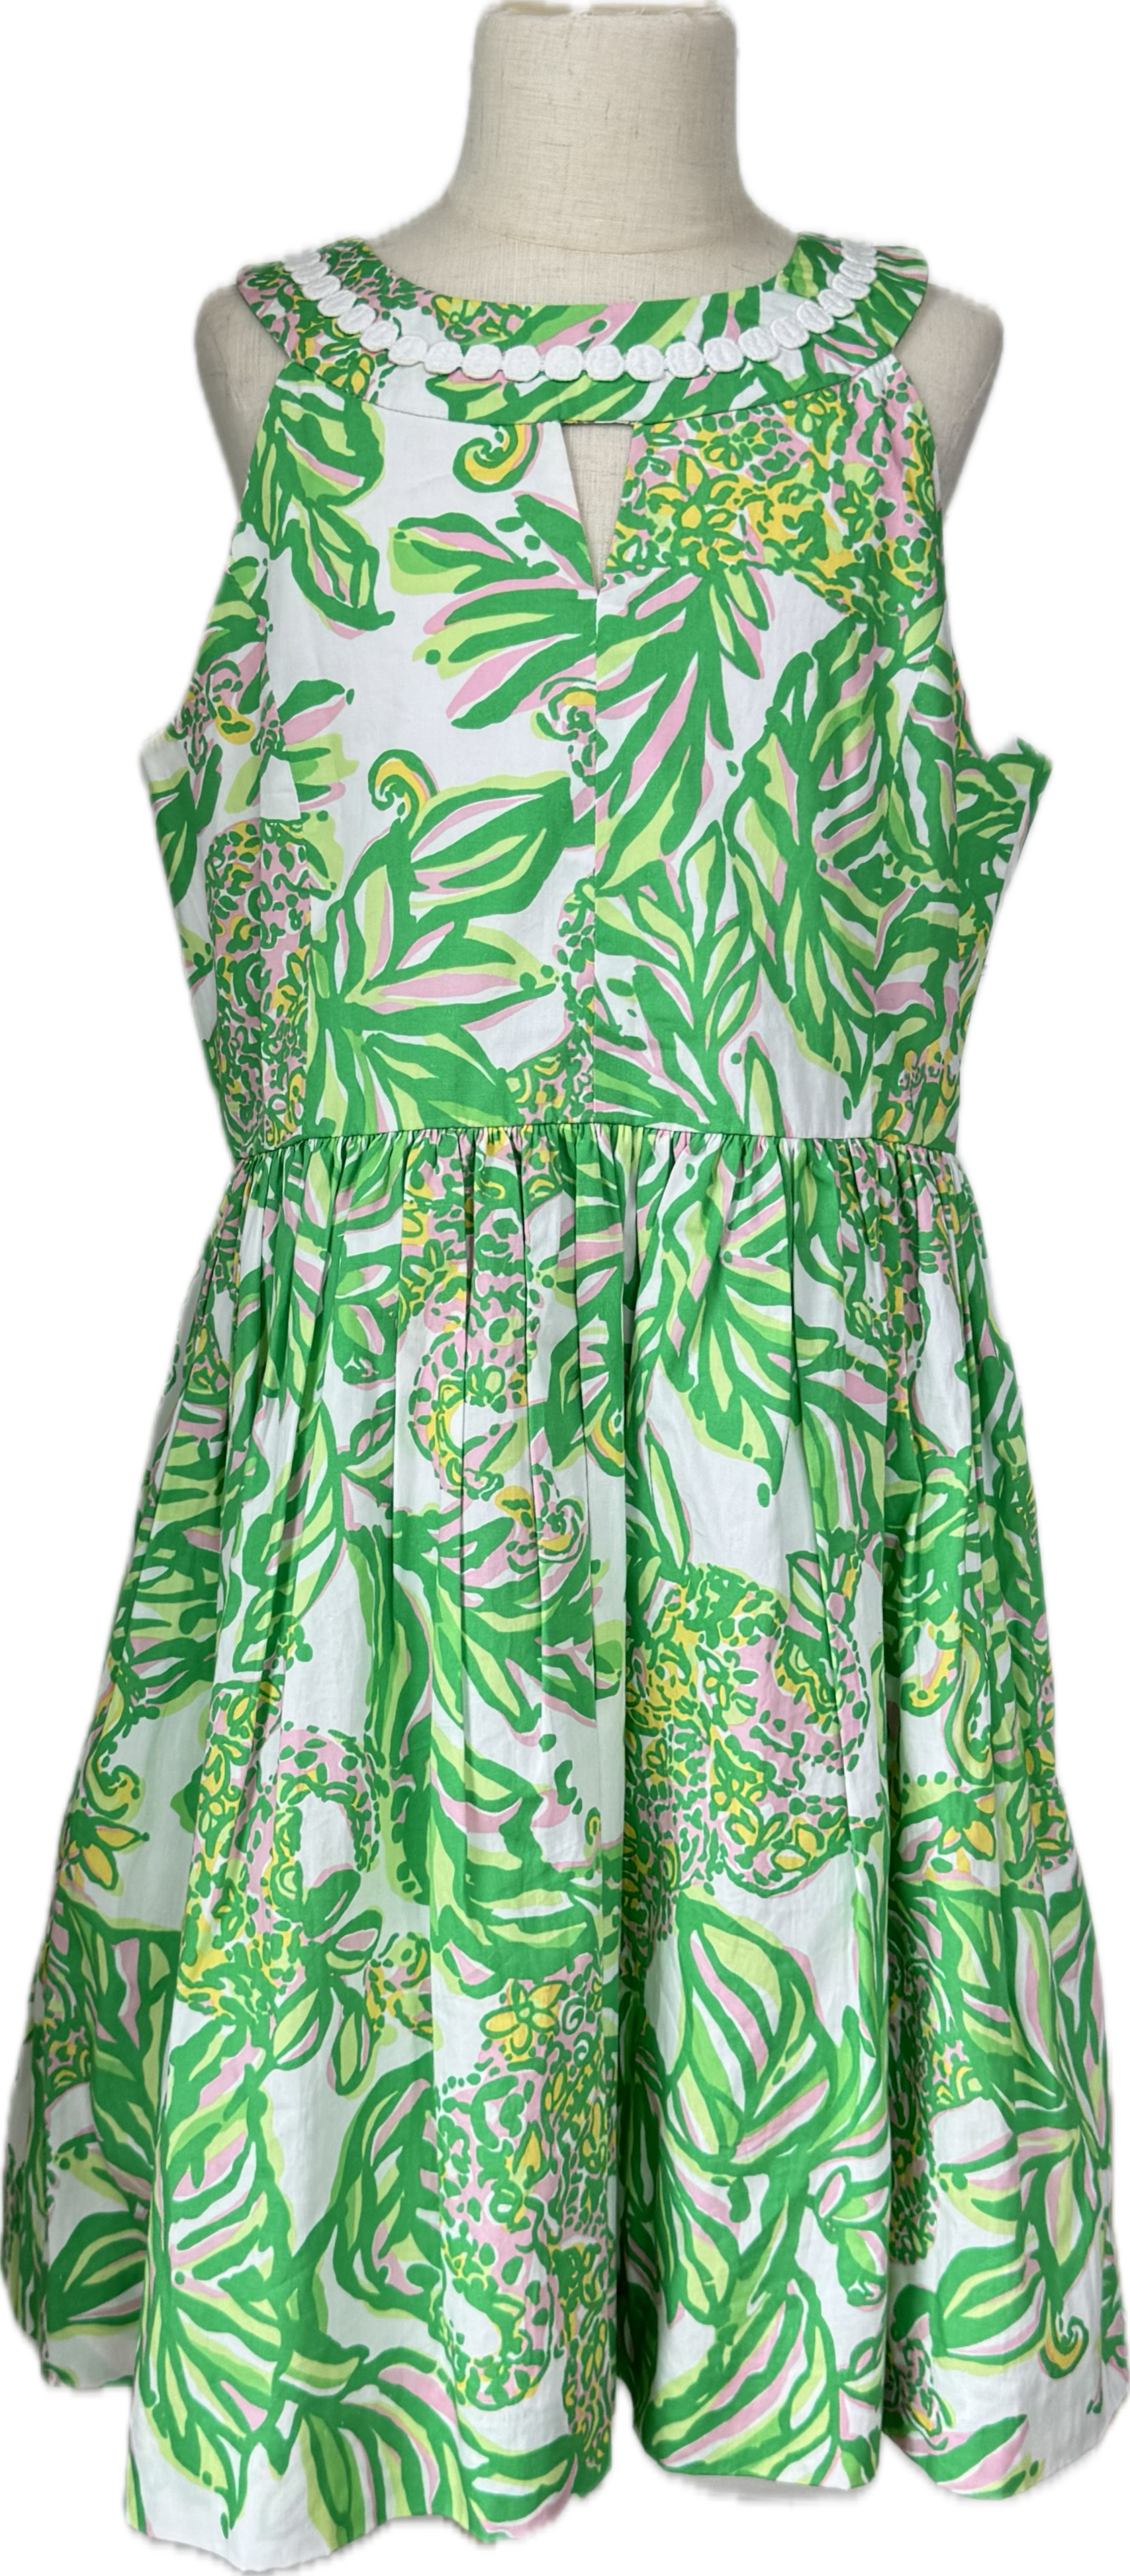 Lilly Pulitzer Dress, Green/Pink Girls Size 14